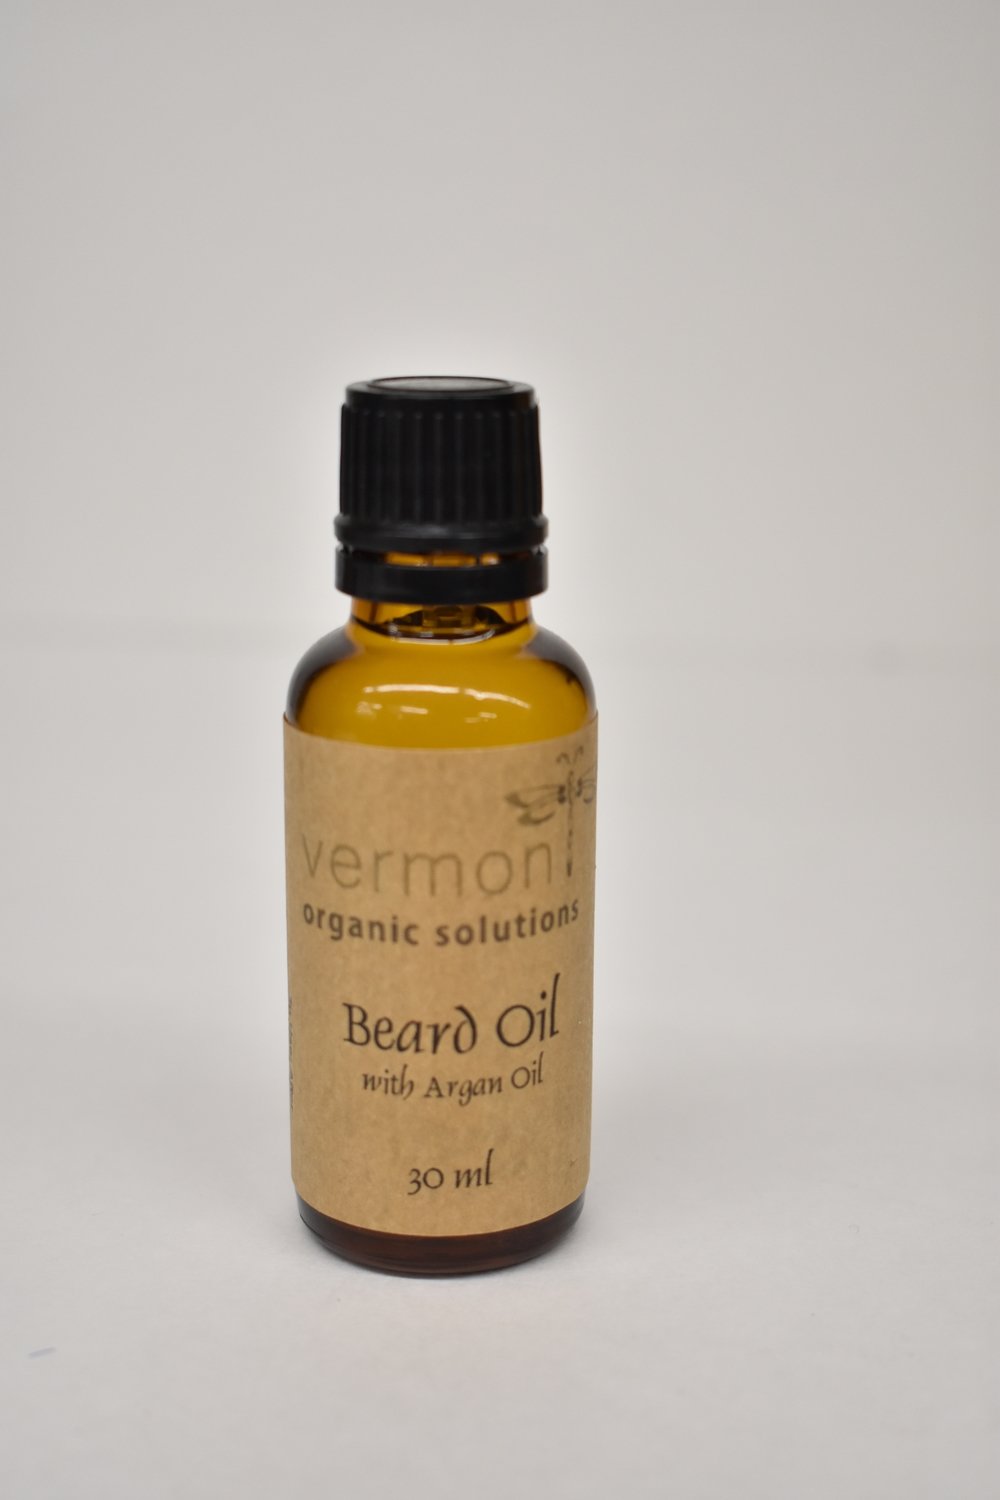 Vermont Organic Beard Oil with organ Oil 30ml